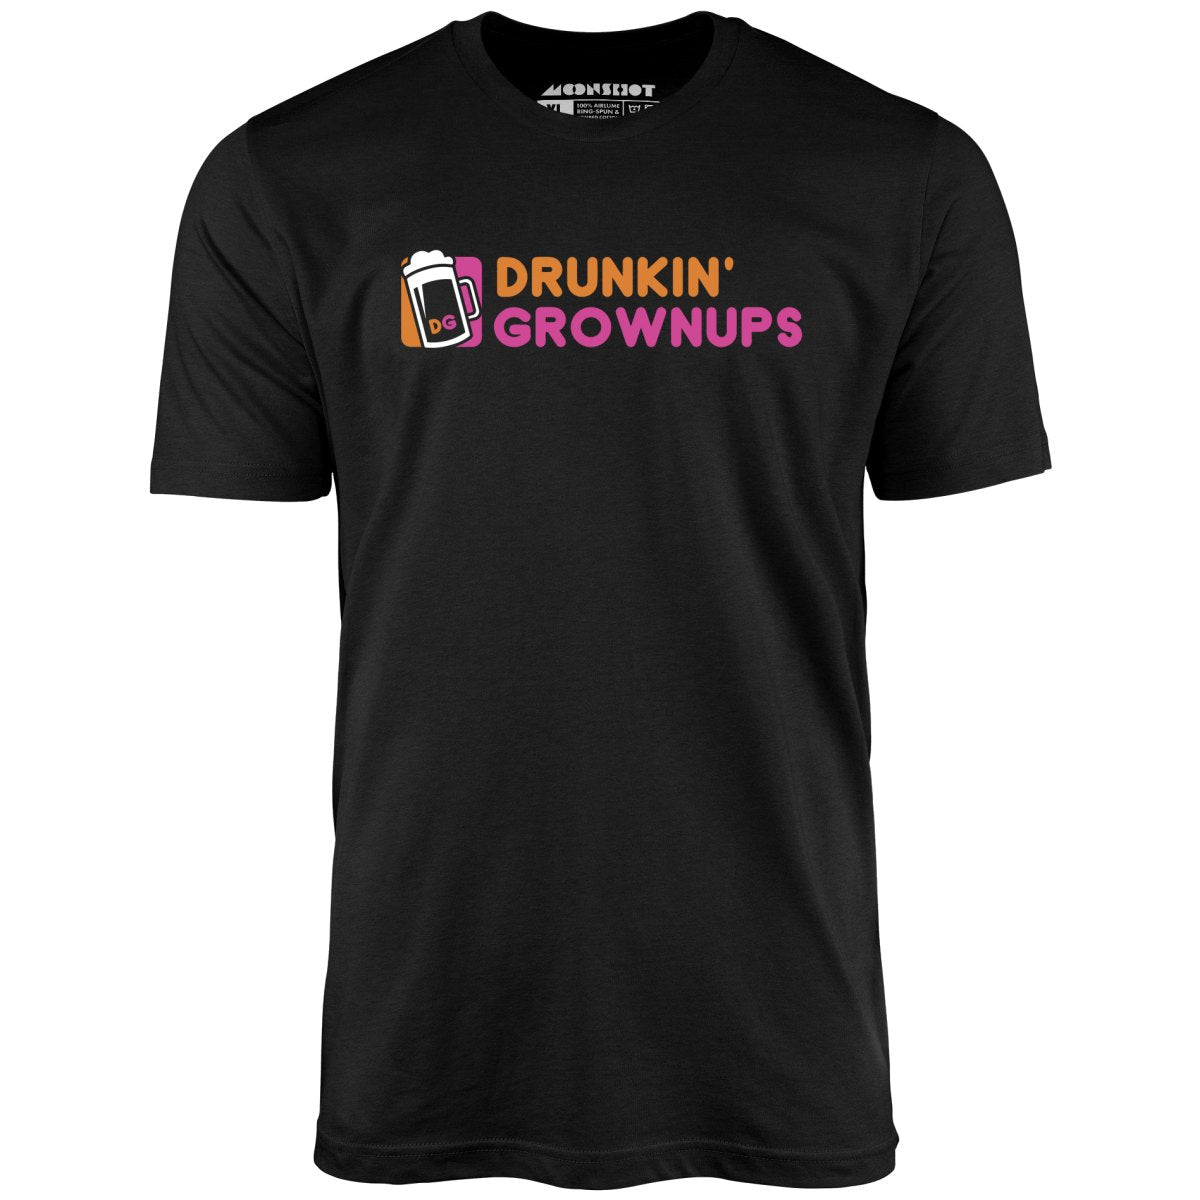 Drunkin' Grownups - Unisex T-Shirt